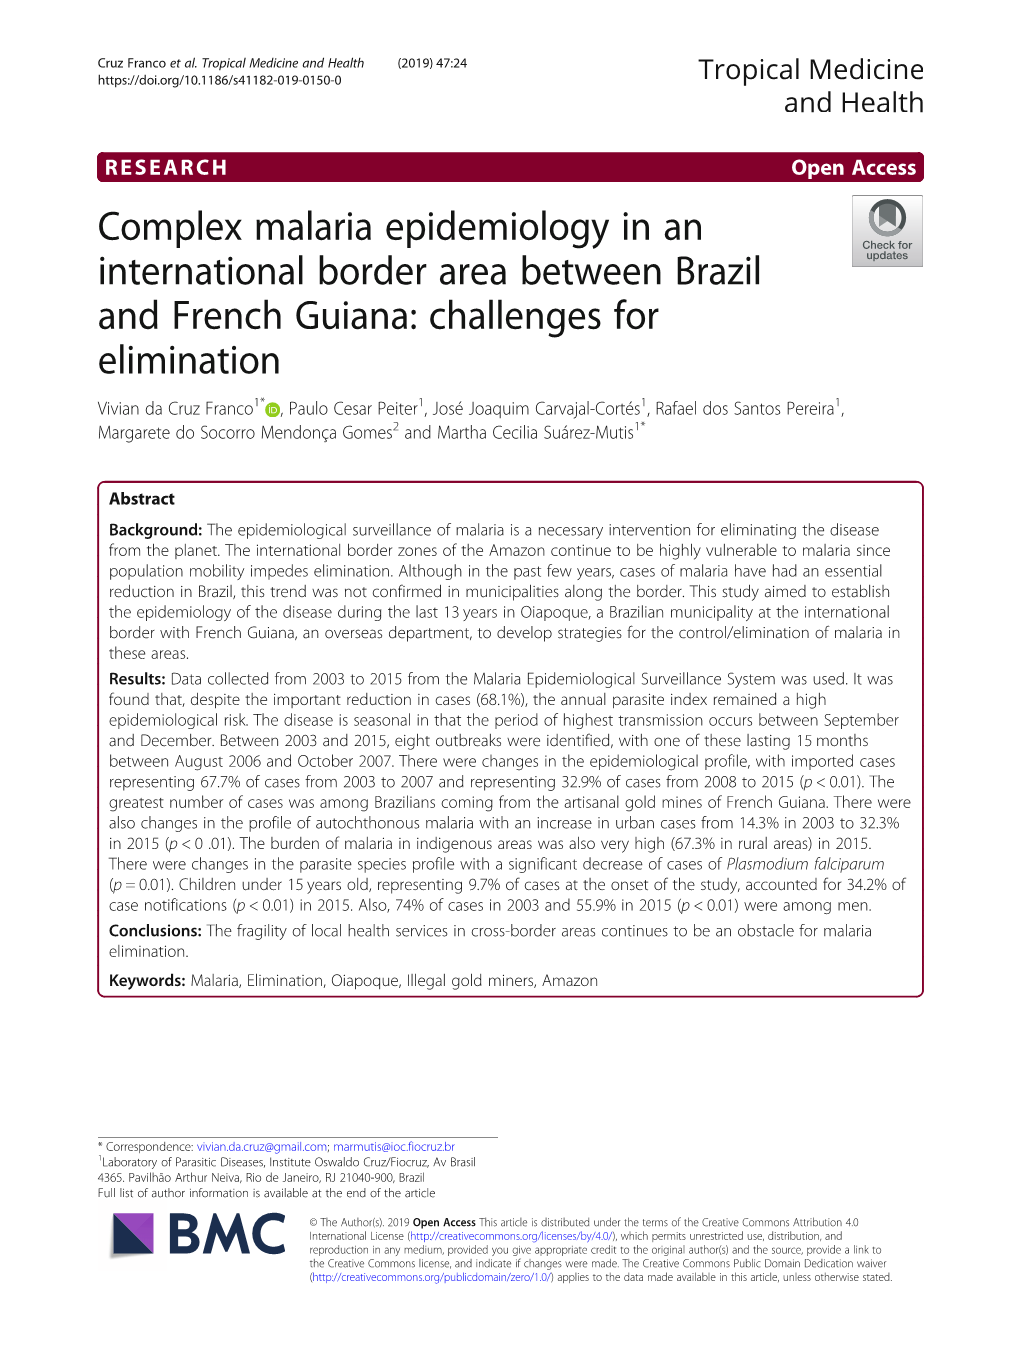 Complex Malaria Epidemiology in an International Border Area Between